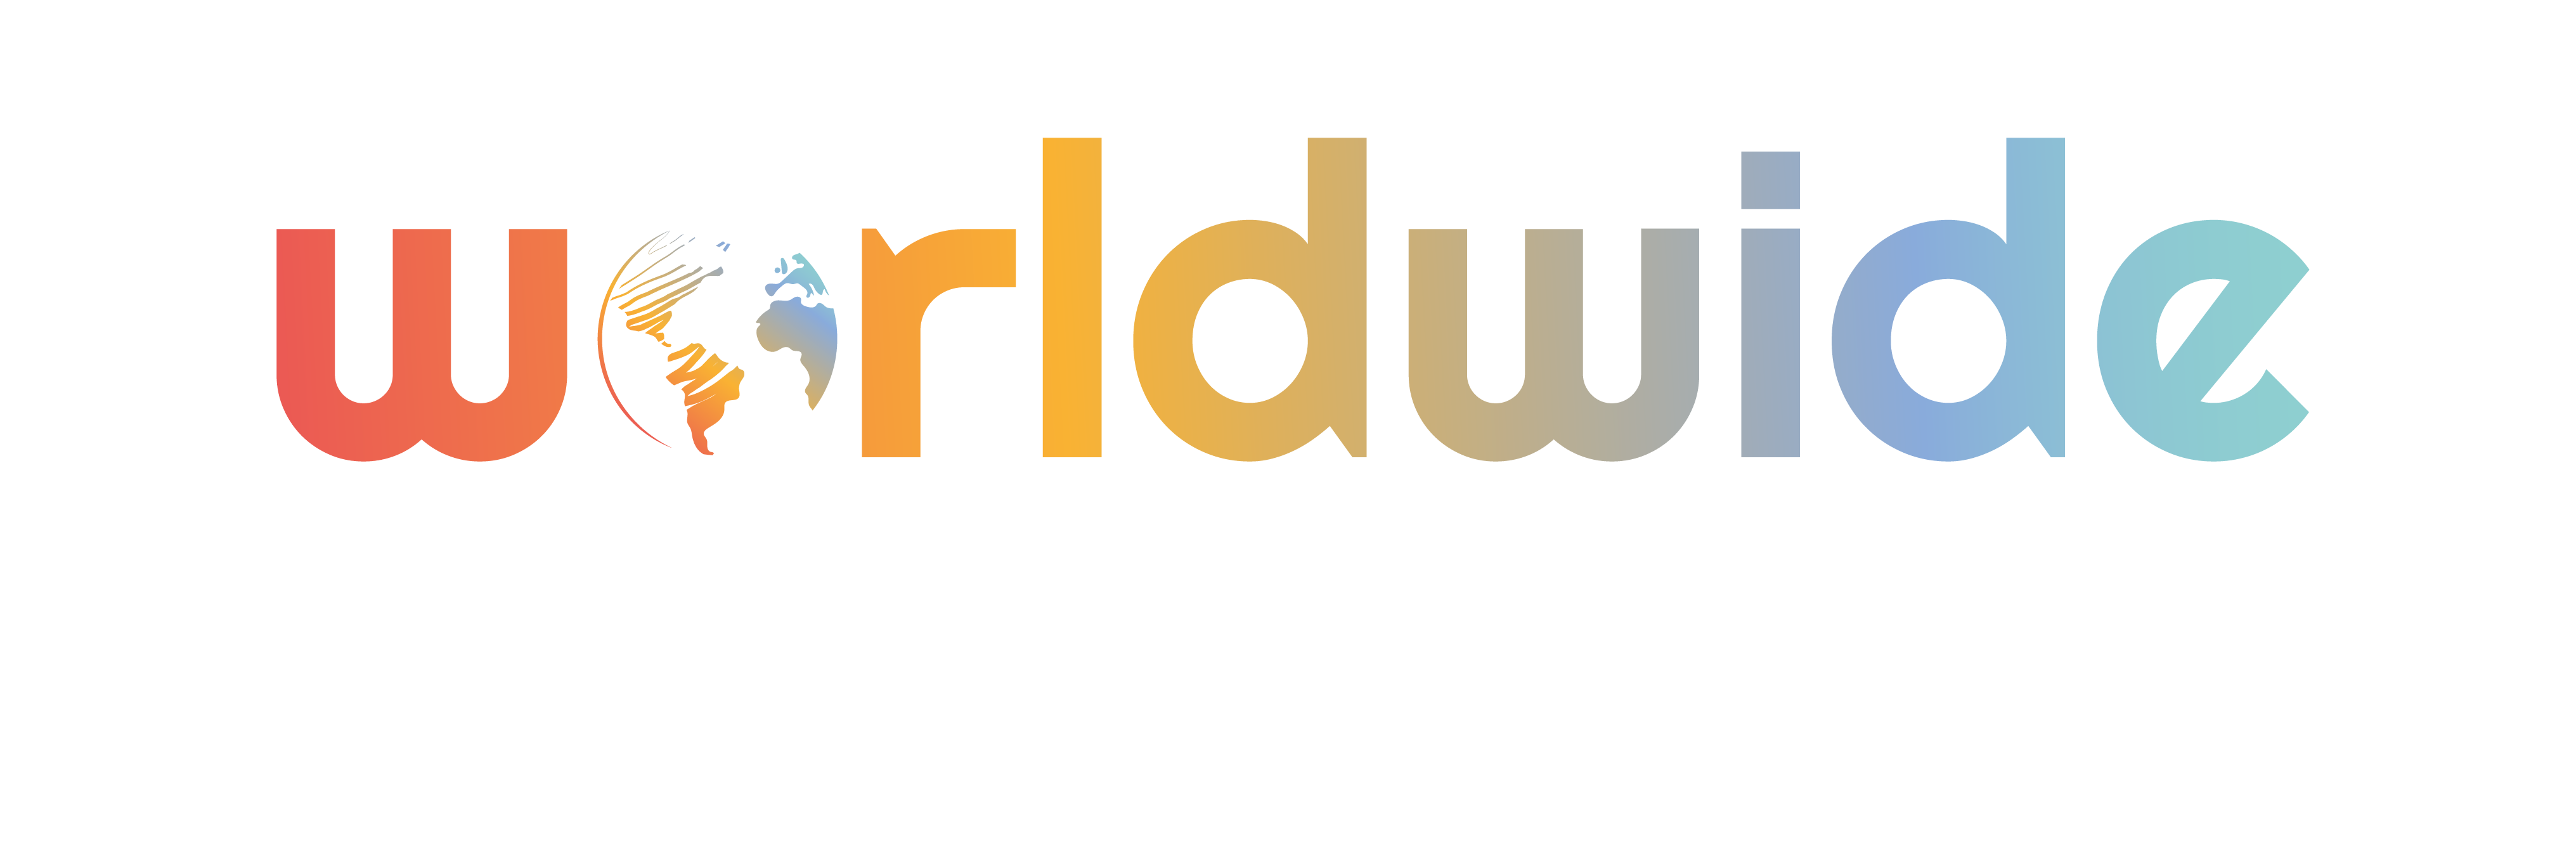 Worldwide Carbon Price